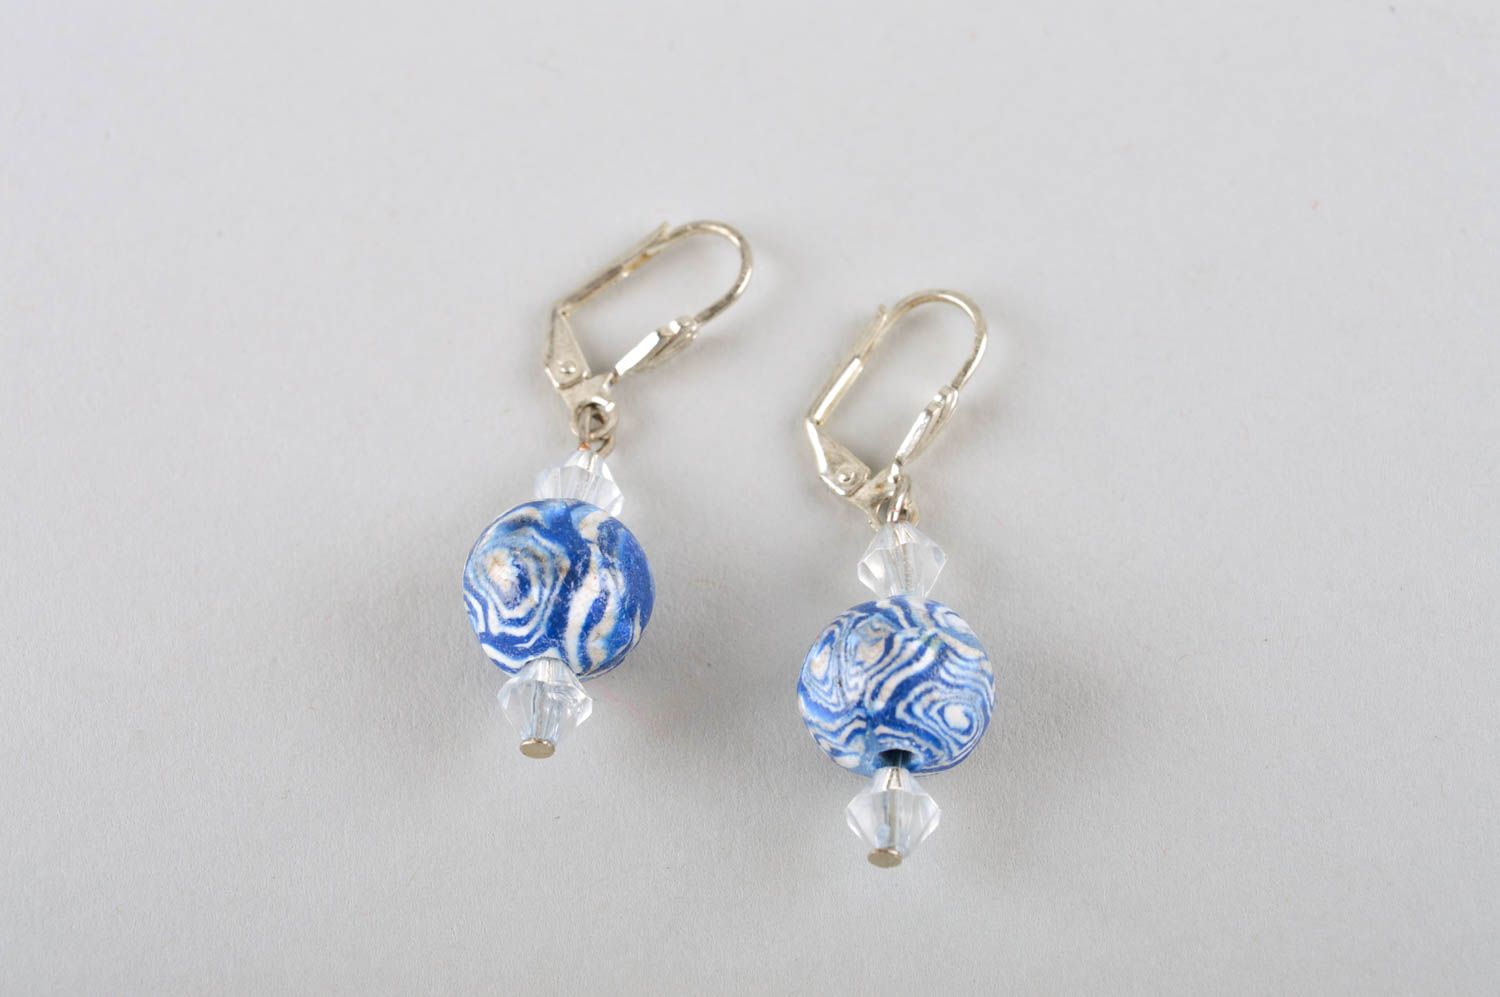 Handmade earrings designer earrings fashion accessories plastic jewelry photo 2